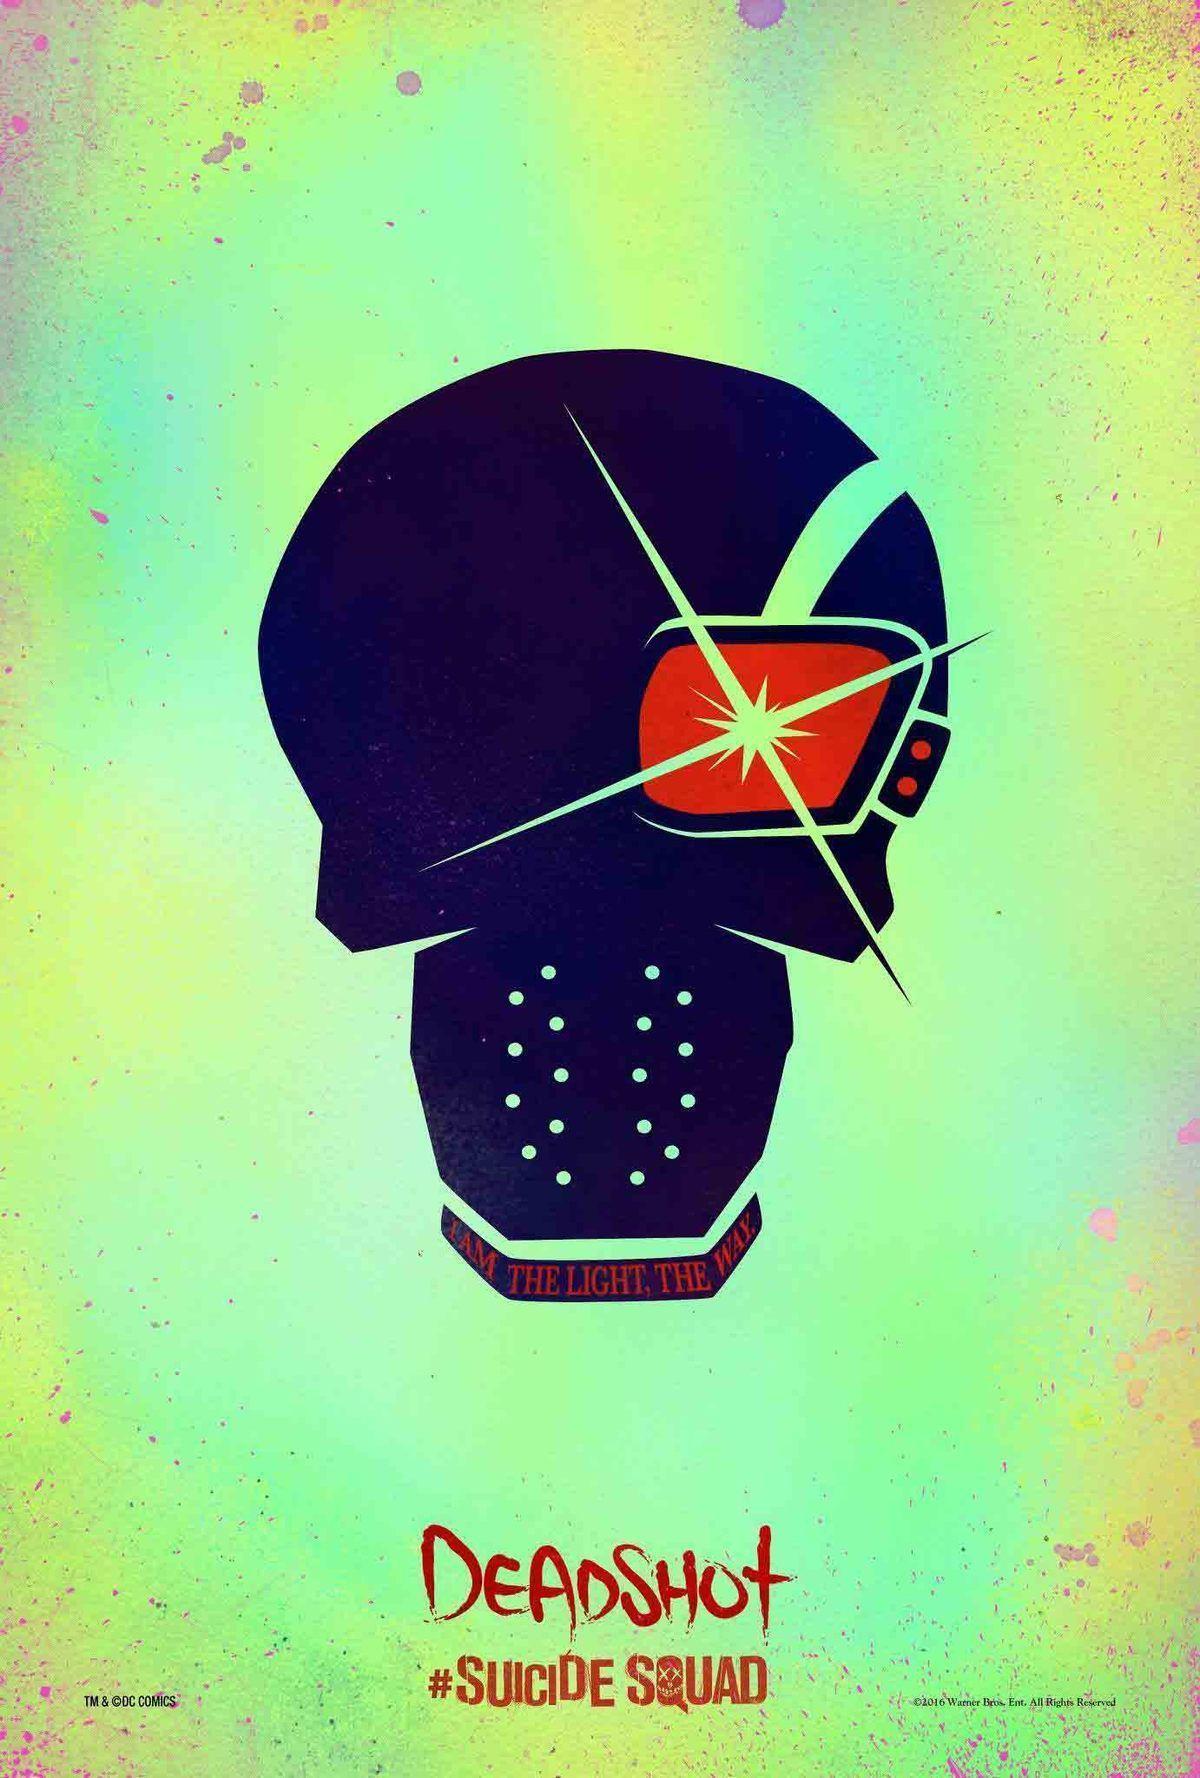 Deadshot Poster Suicide Squad wallpaper HD 2016 in Marvel